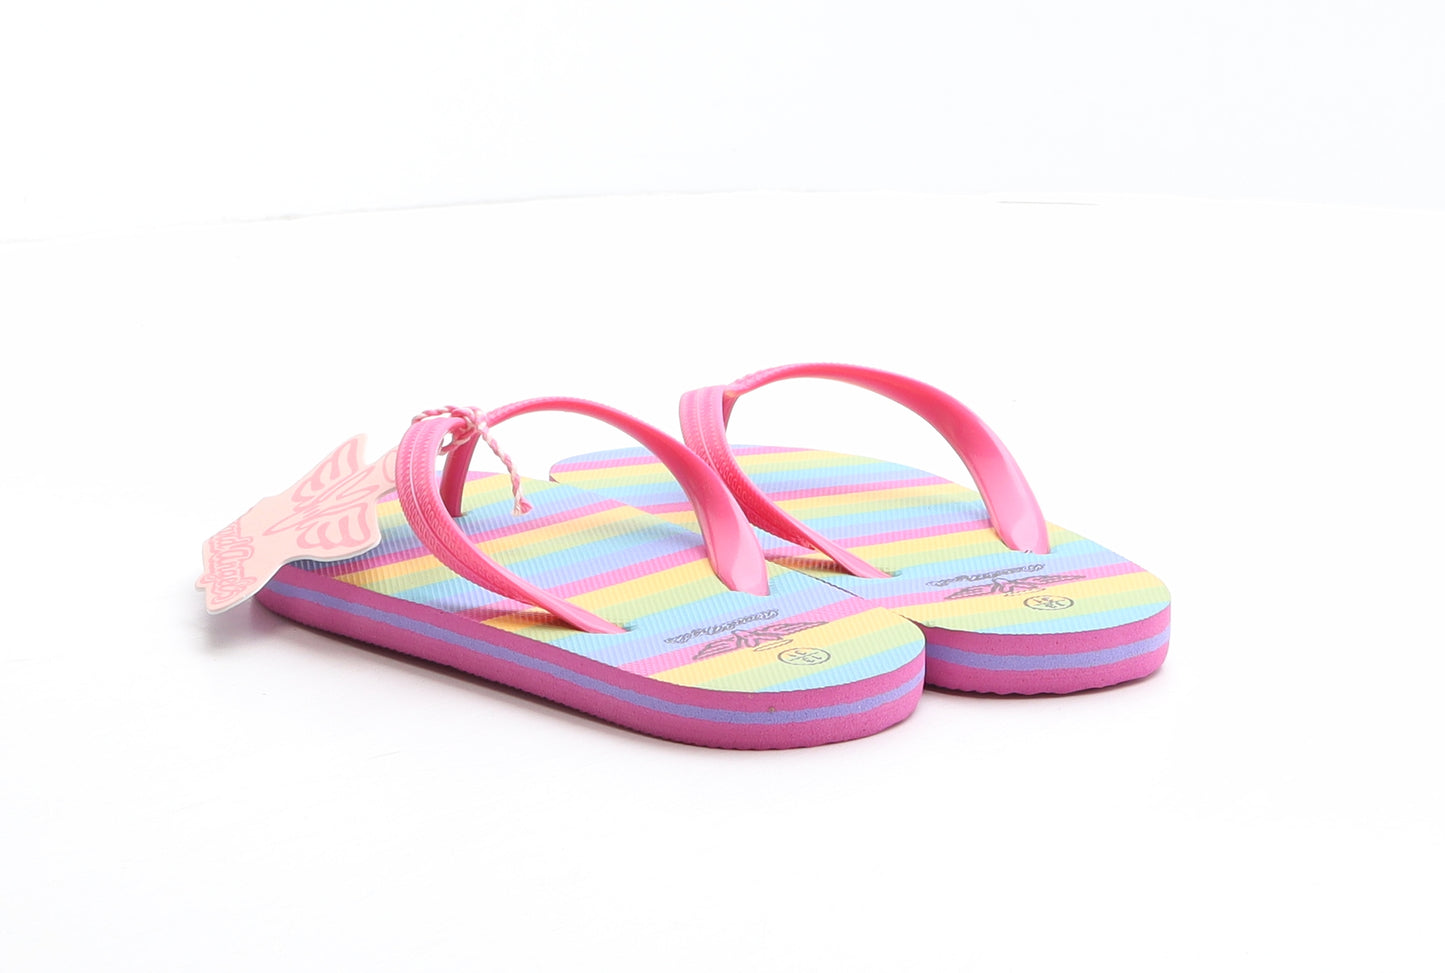 Board Angels Girls Pink Synthetic Flip-Flop Sandal UK 13 31